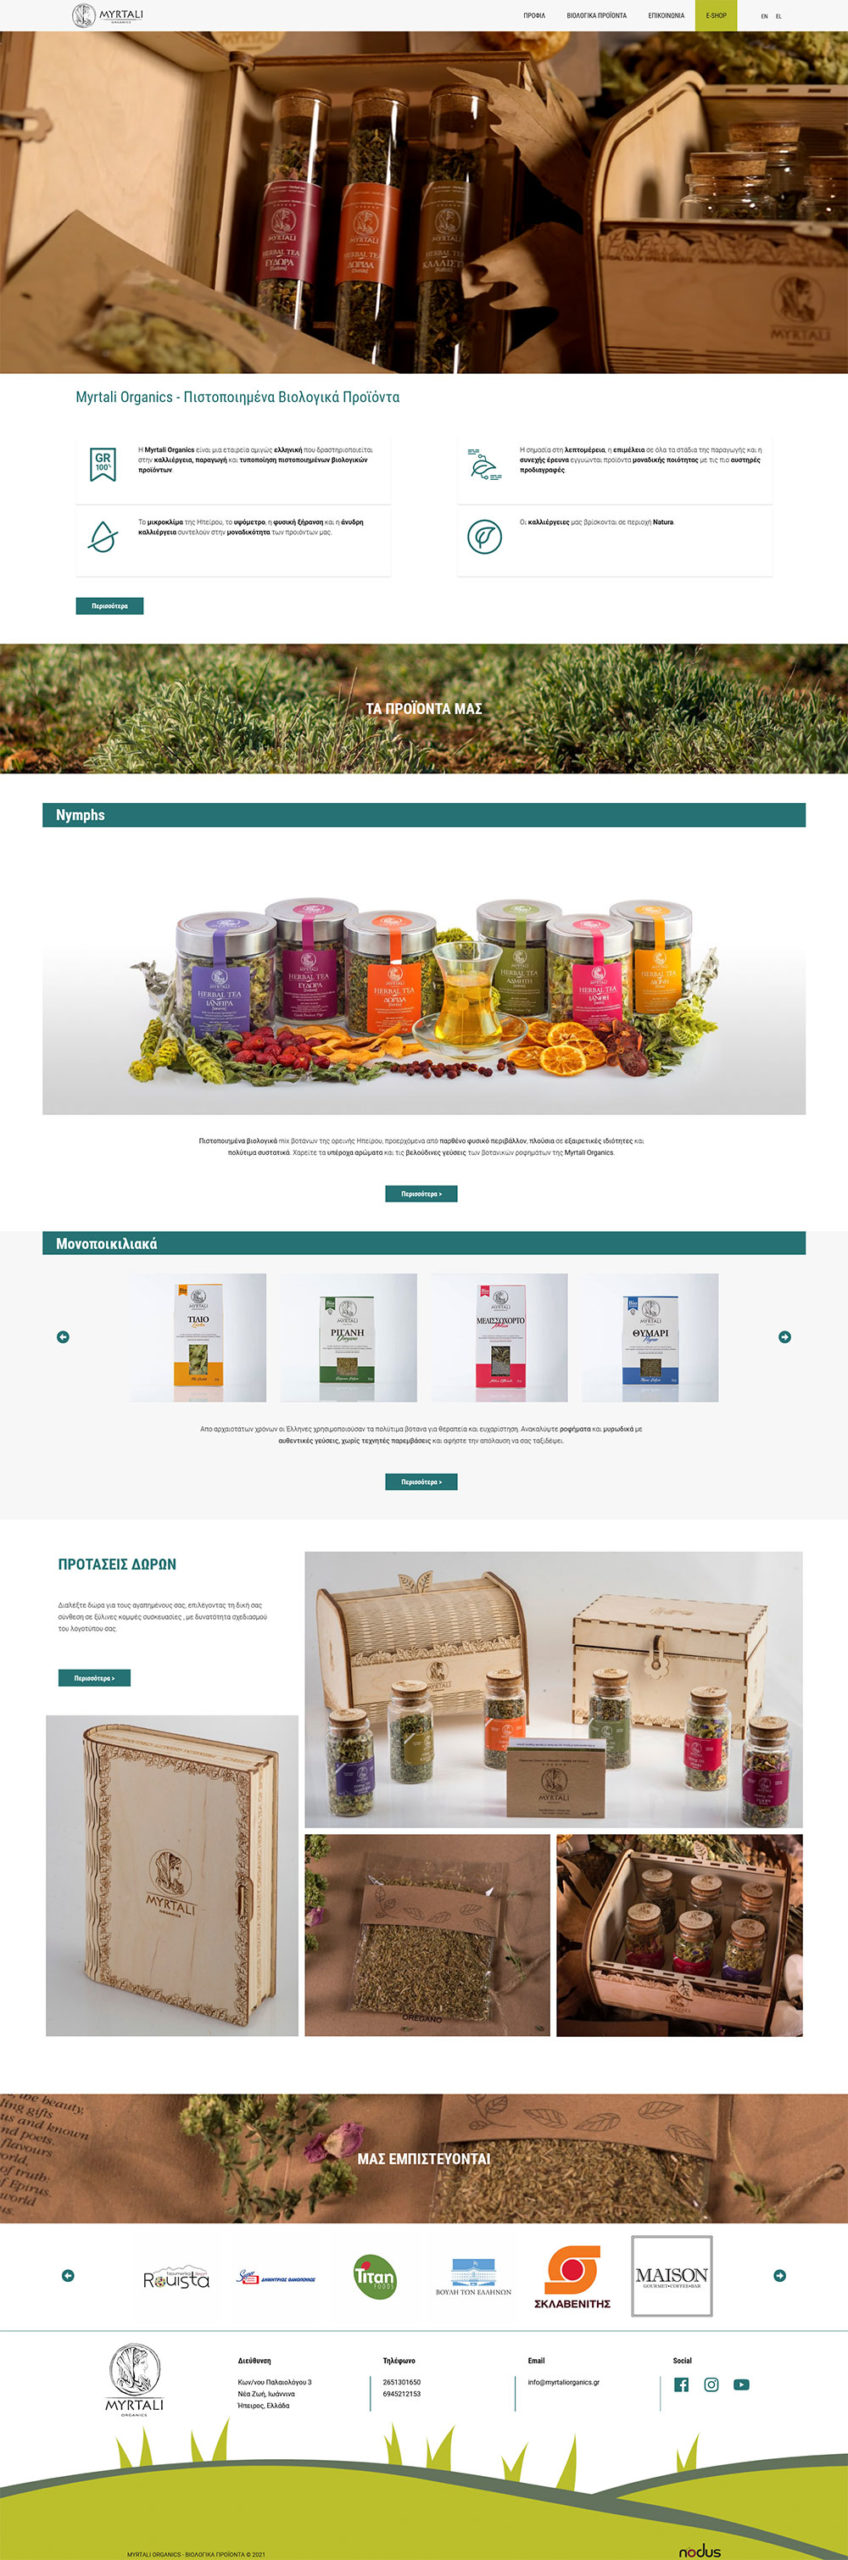 Myrtali-organics-website-home